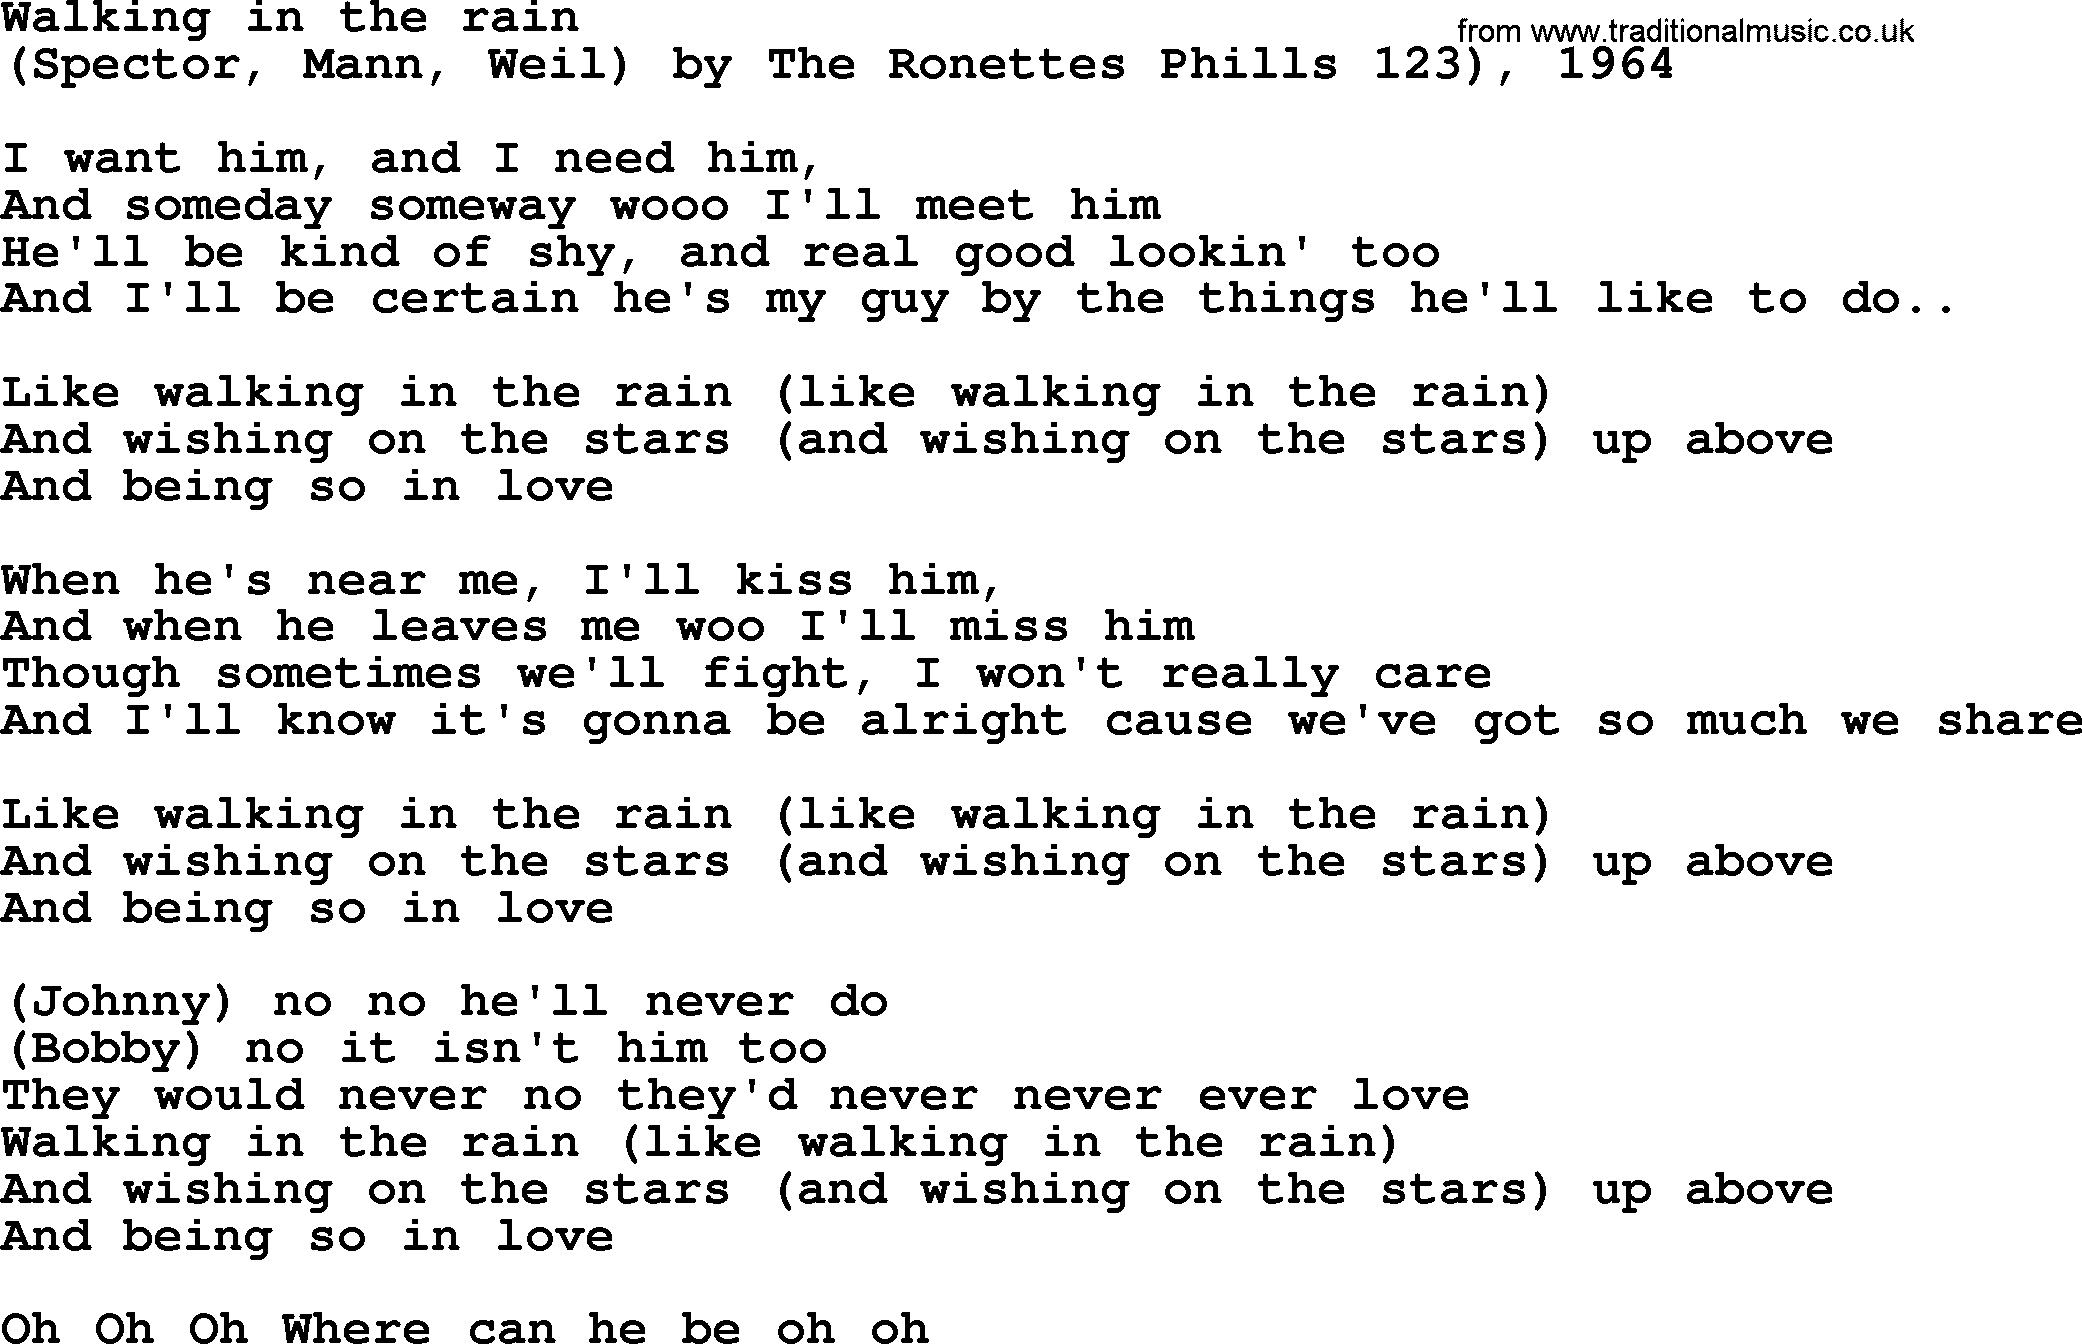 Bruce Springsteen song: Walking In The Rain lyrics